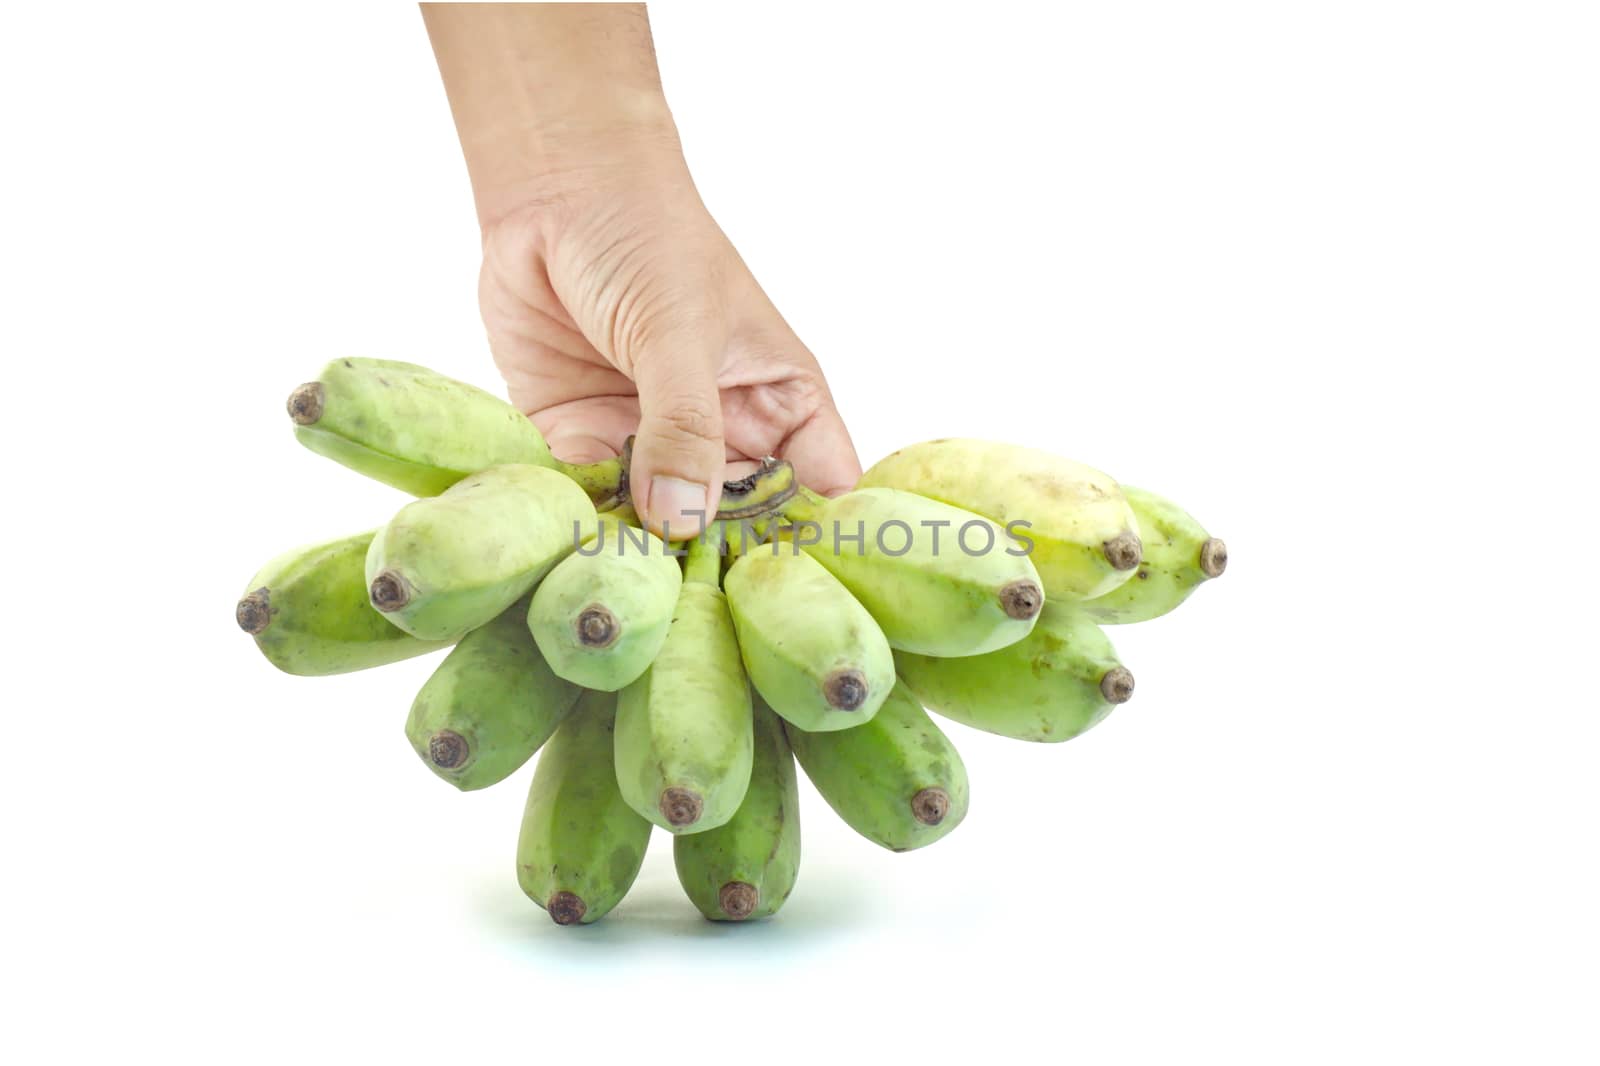 Hand-picked bananas on isolate white background, Green banana